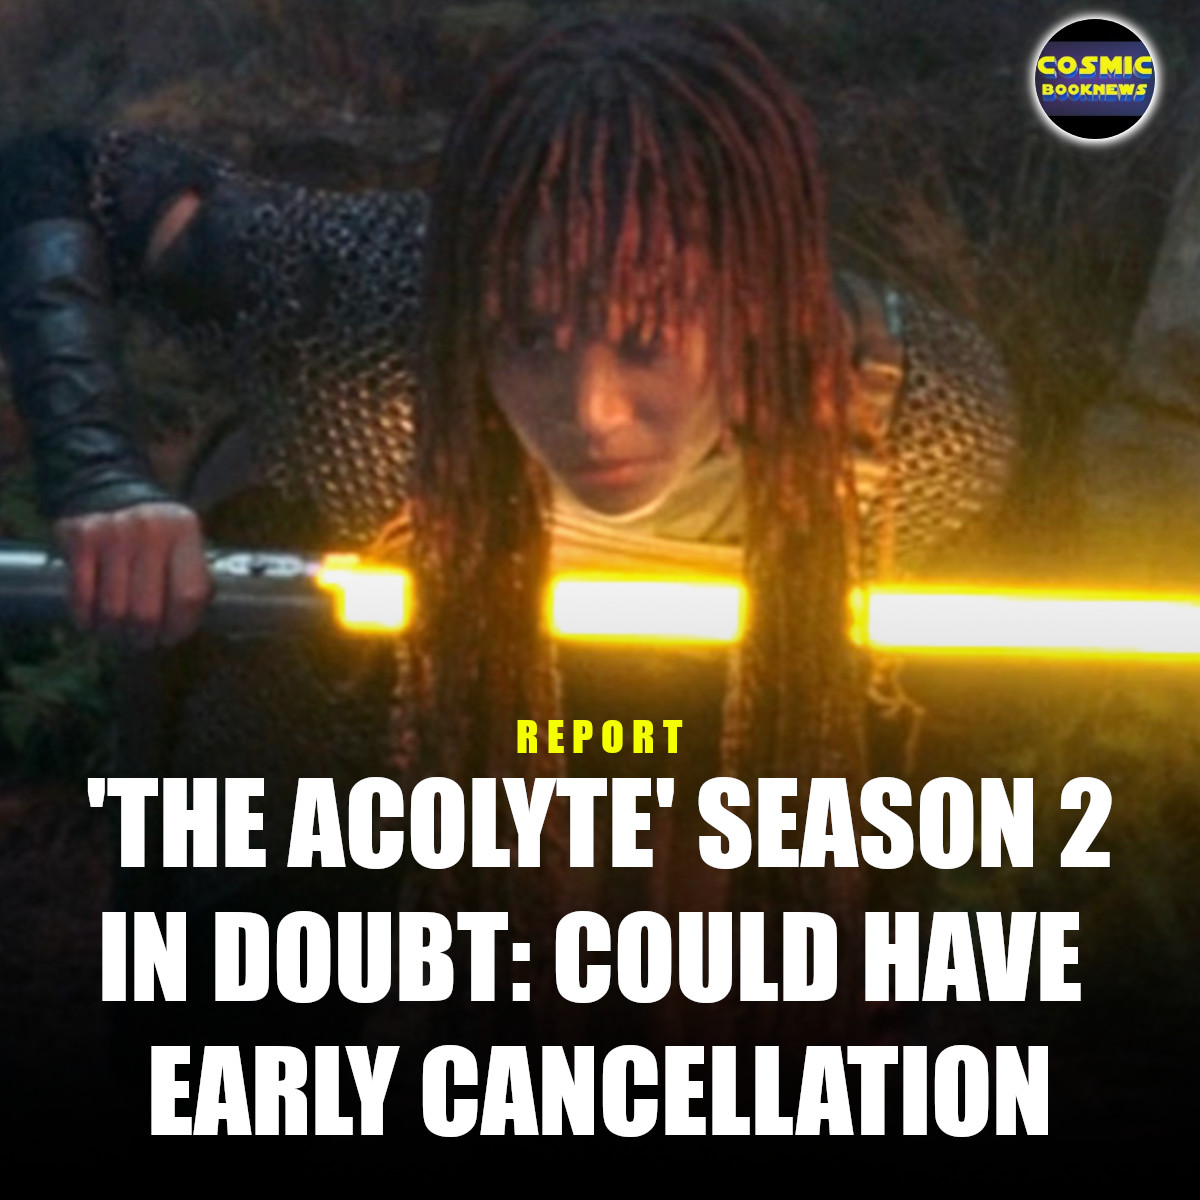 acolyte season 2 doubt